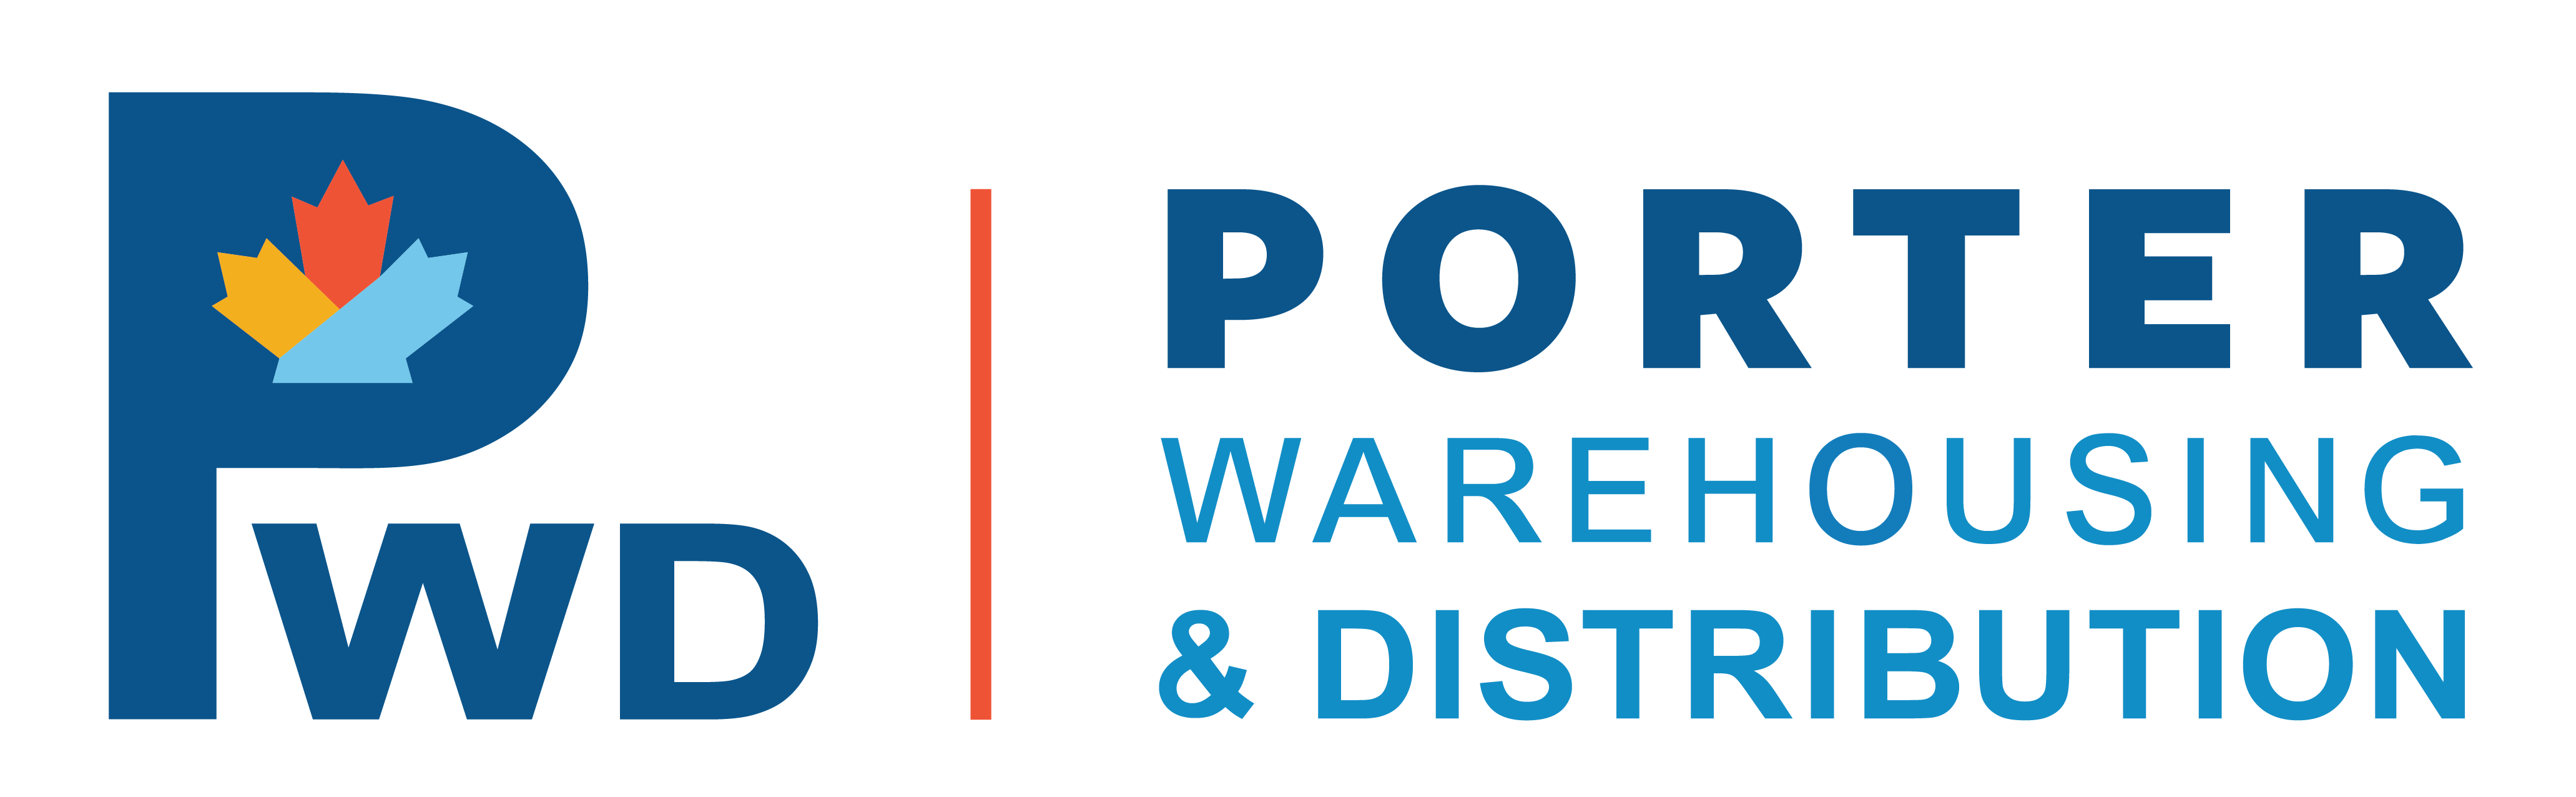 Porter Warehousing